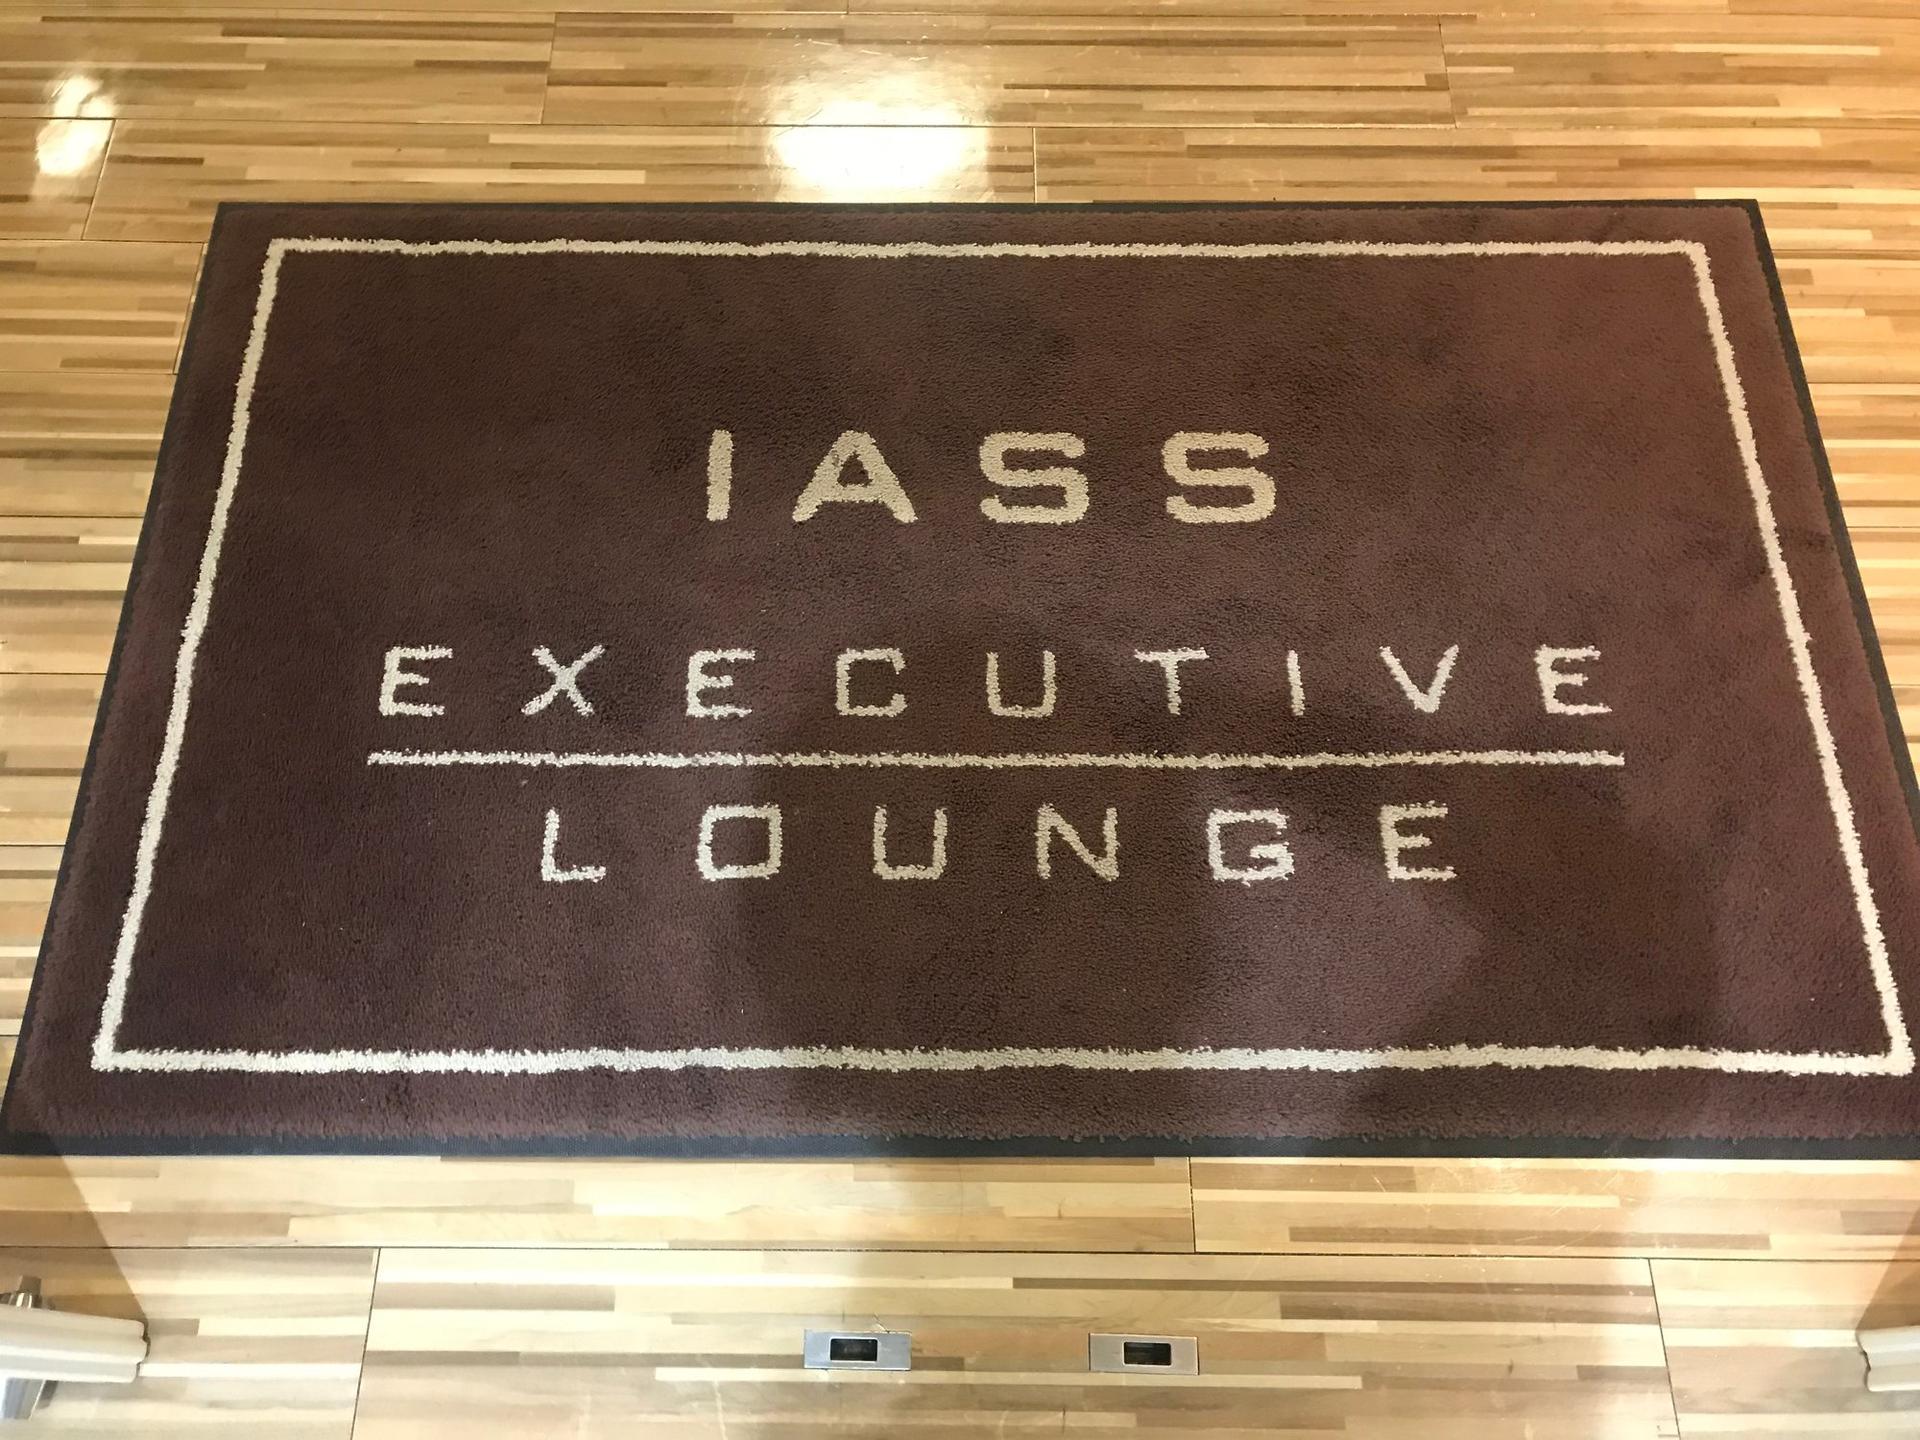 IASS Executive Lounge image 14 of 16